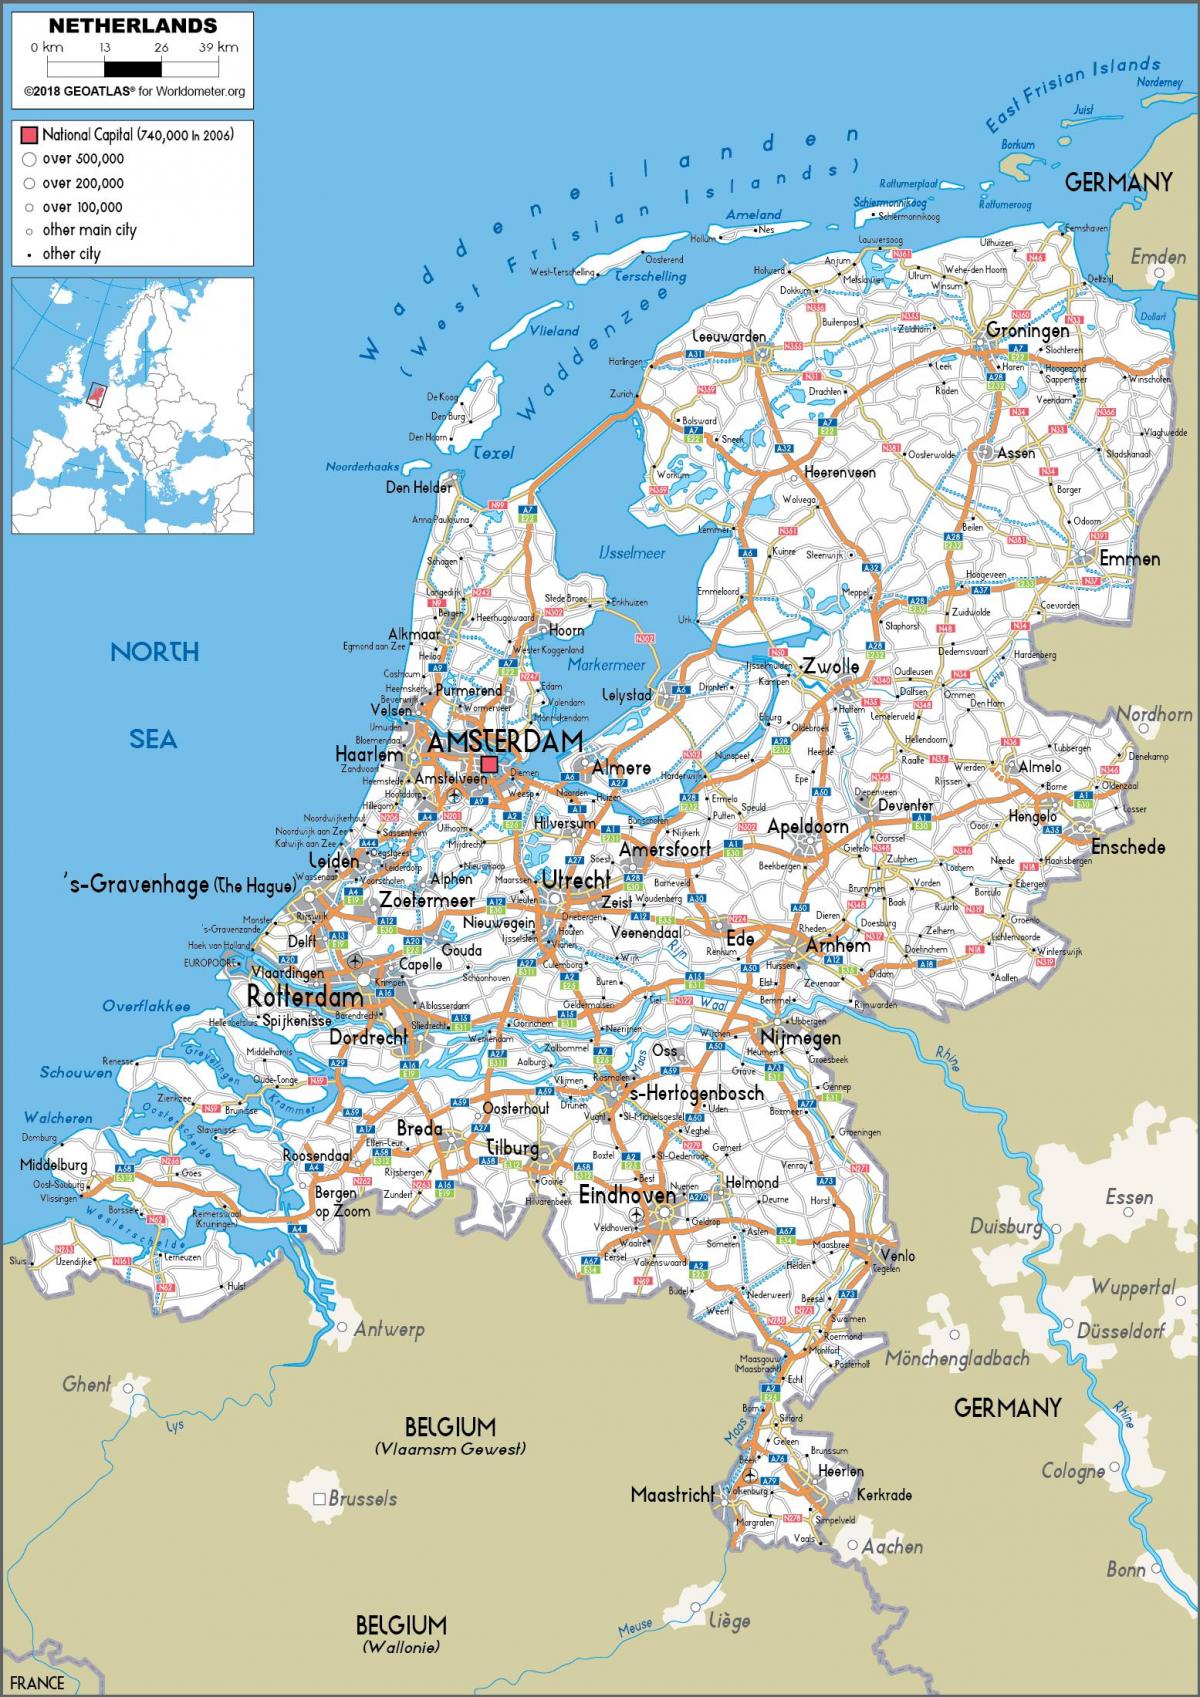 Mappa stradale di Paesi Bassi